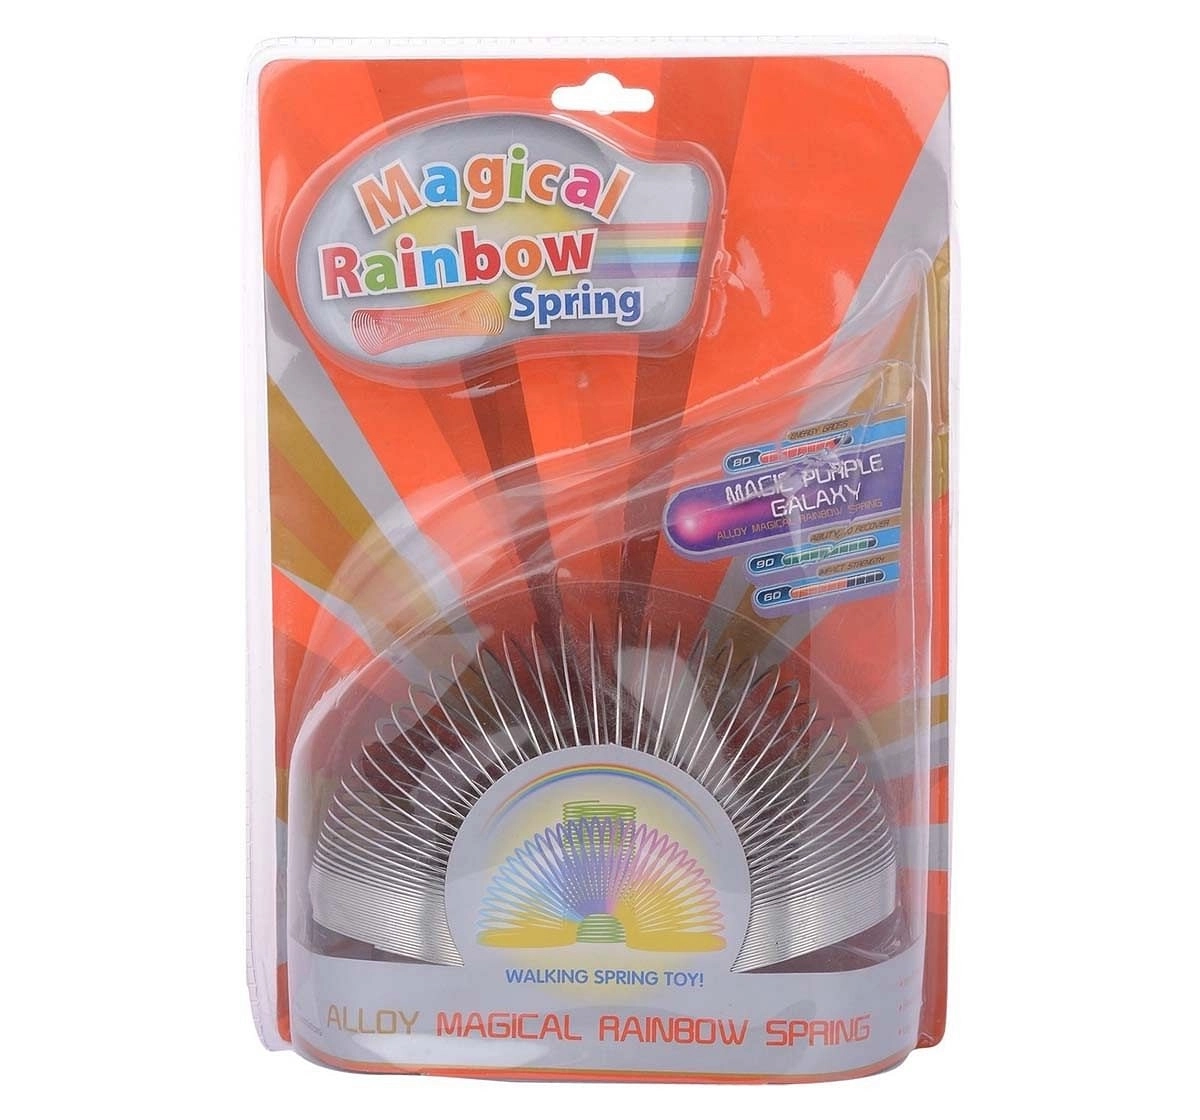 Comdaq Grey Magic Rainbow Spring Impulse Toys for Kids age 3Y+ 